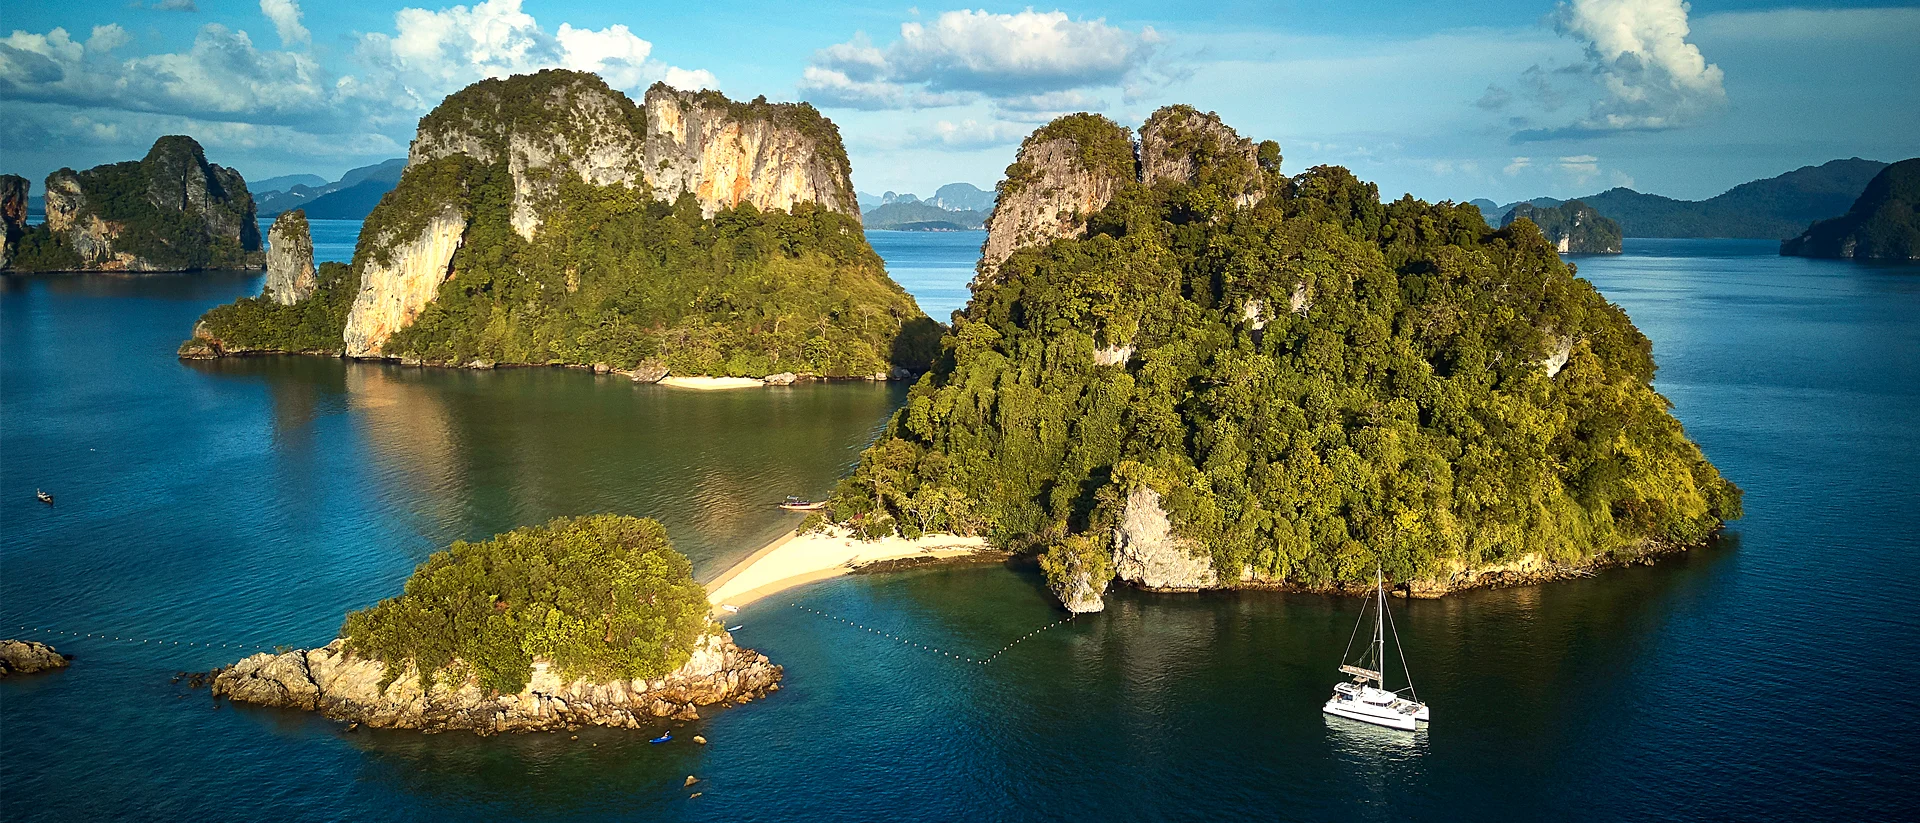 Thailand island and towering rocks and yachts sailing